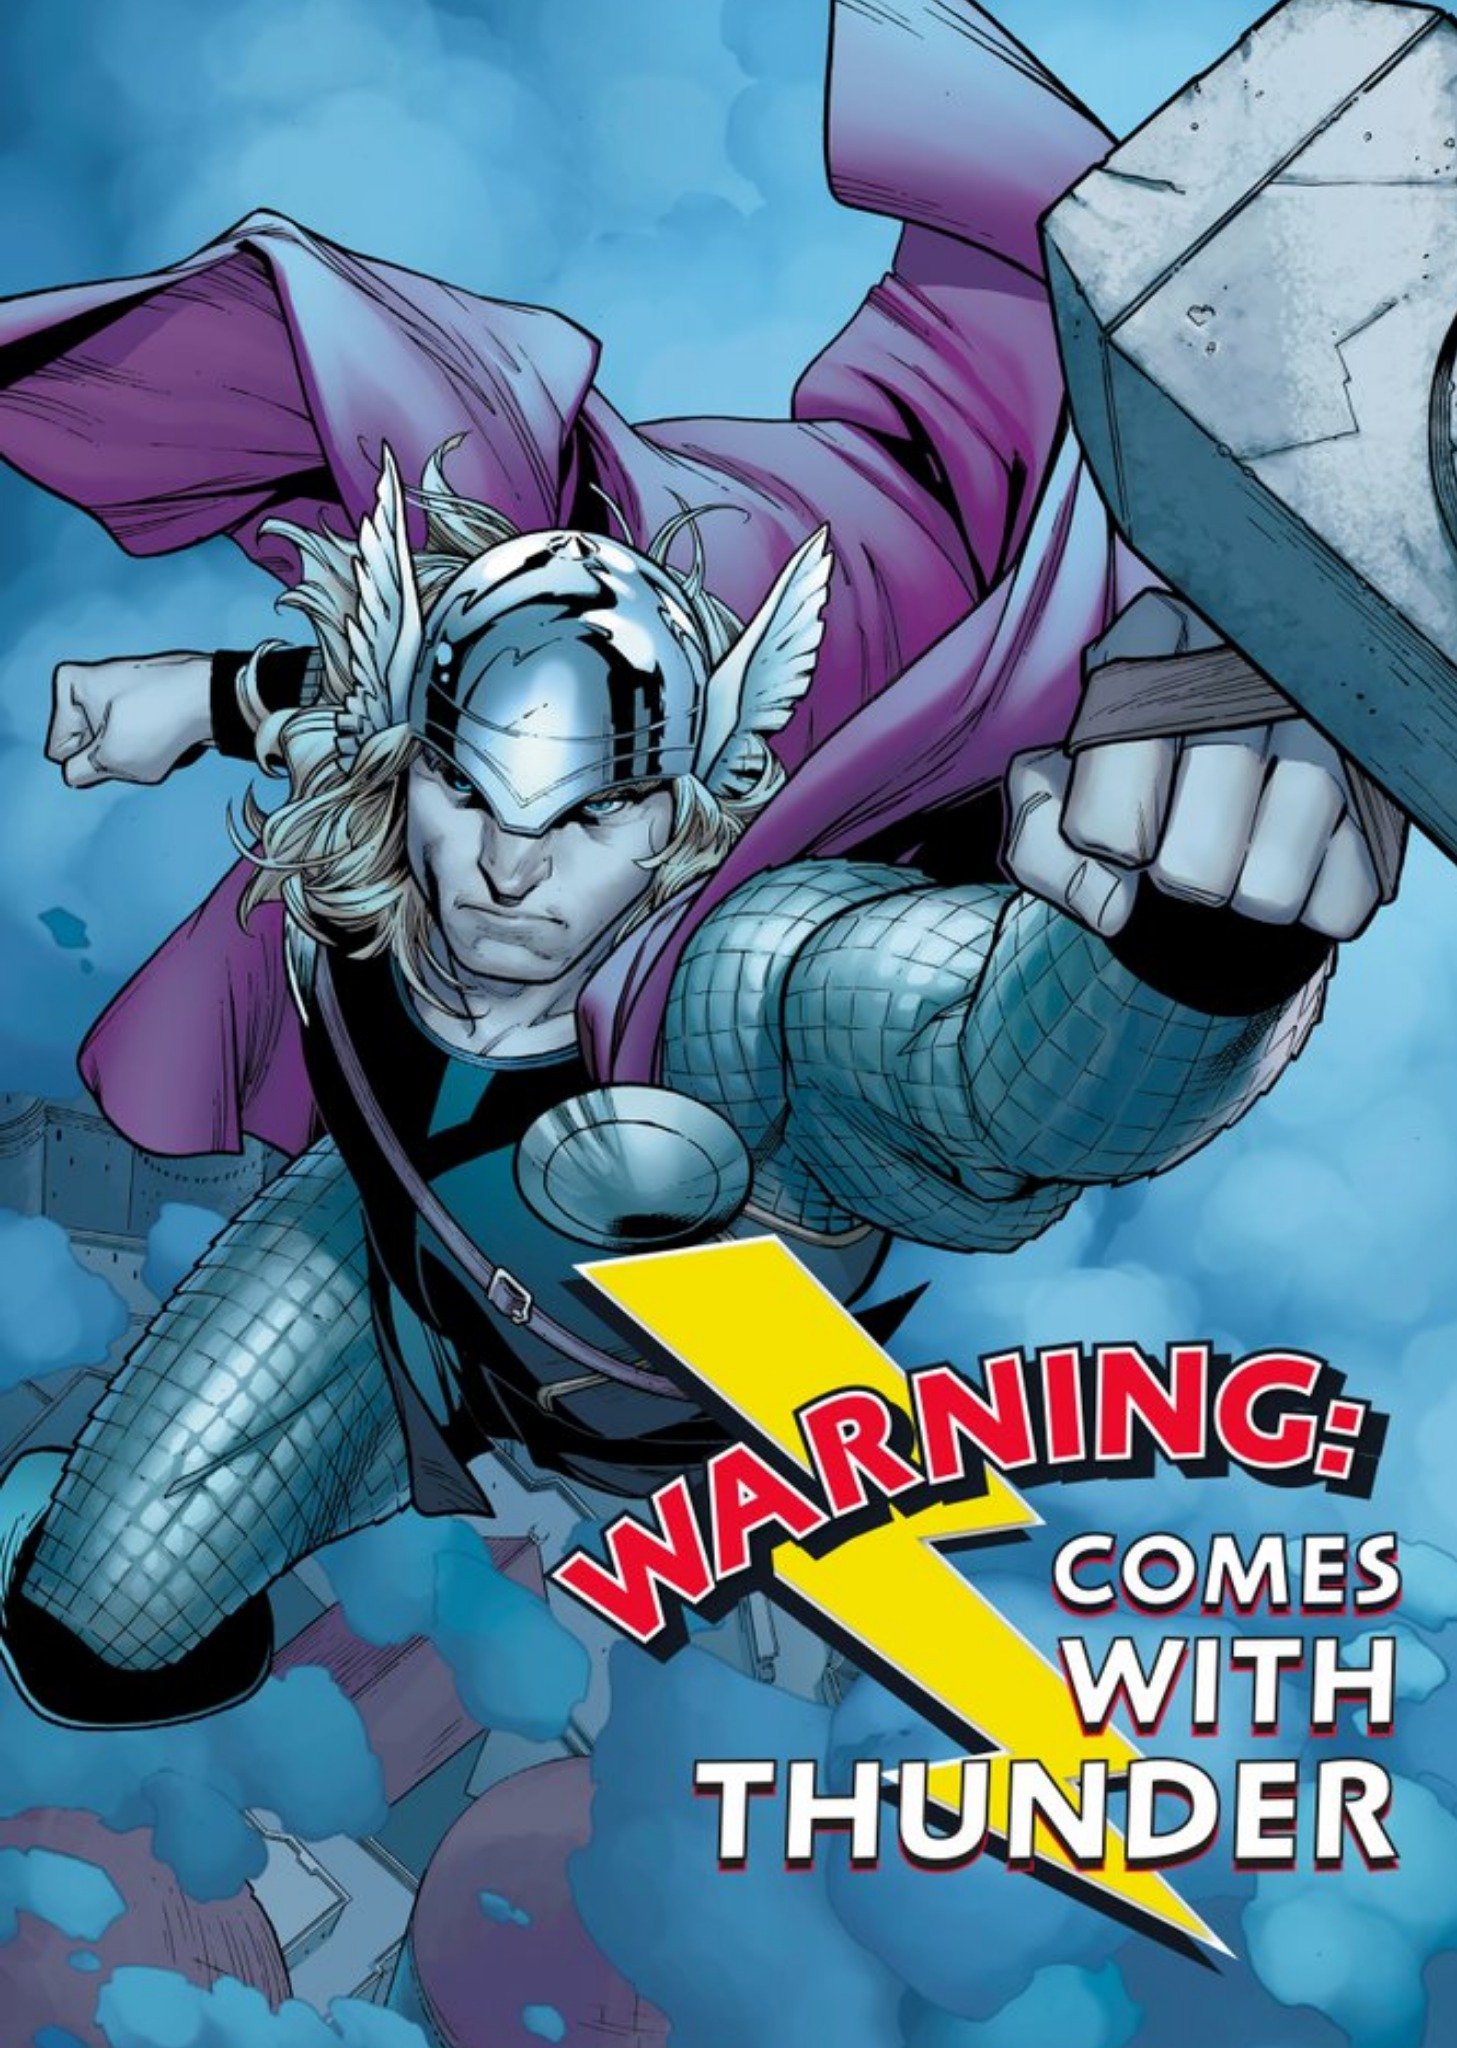 Disney Marvel Avengers Birthday Card - Warning: Comes With Thunder - Thor, Large